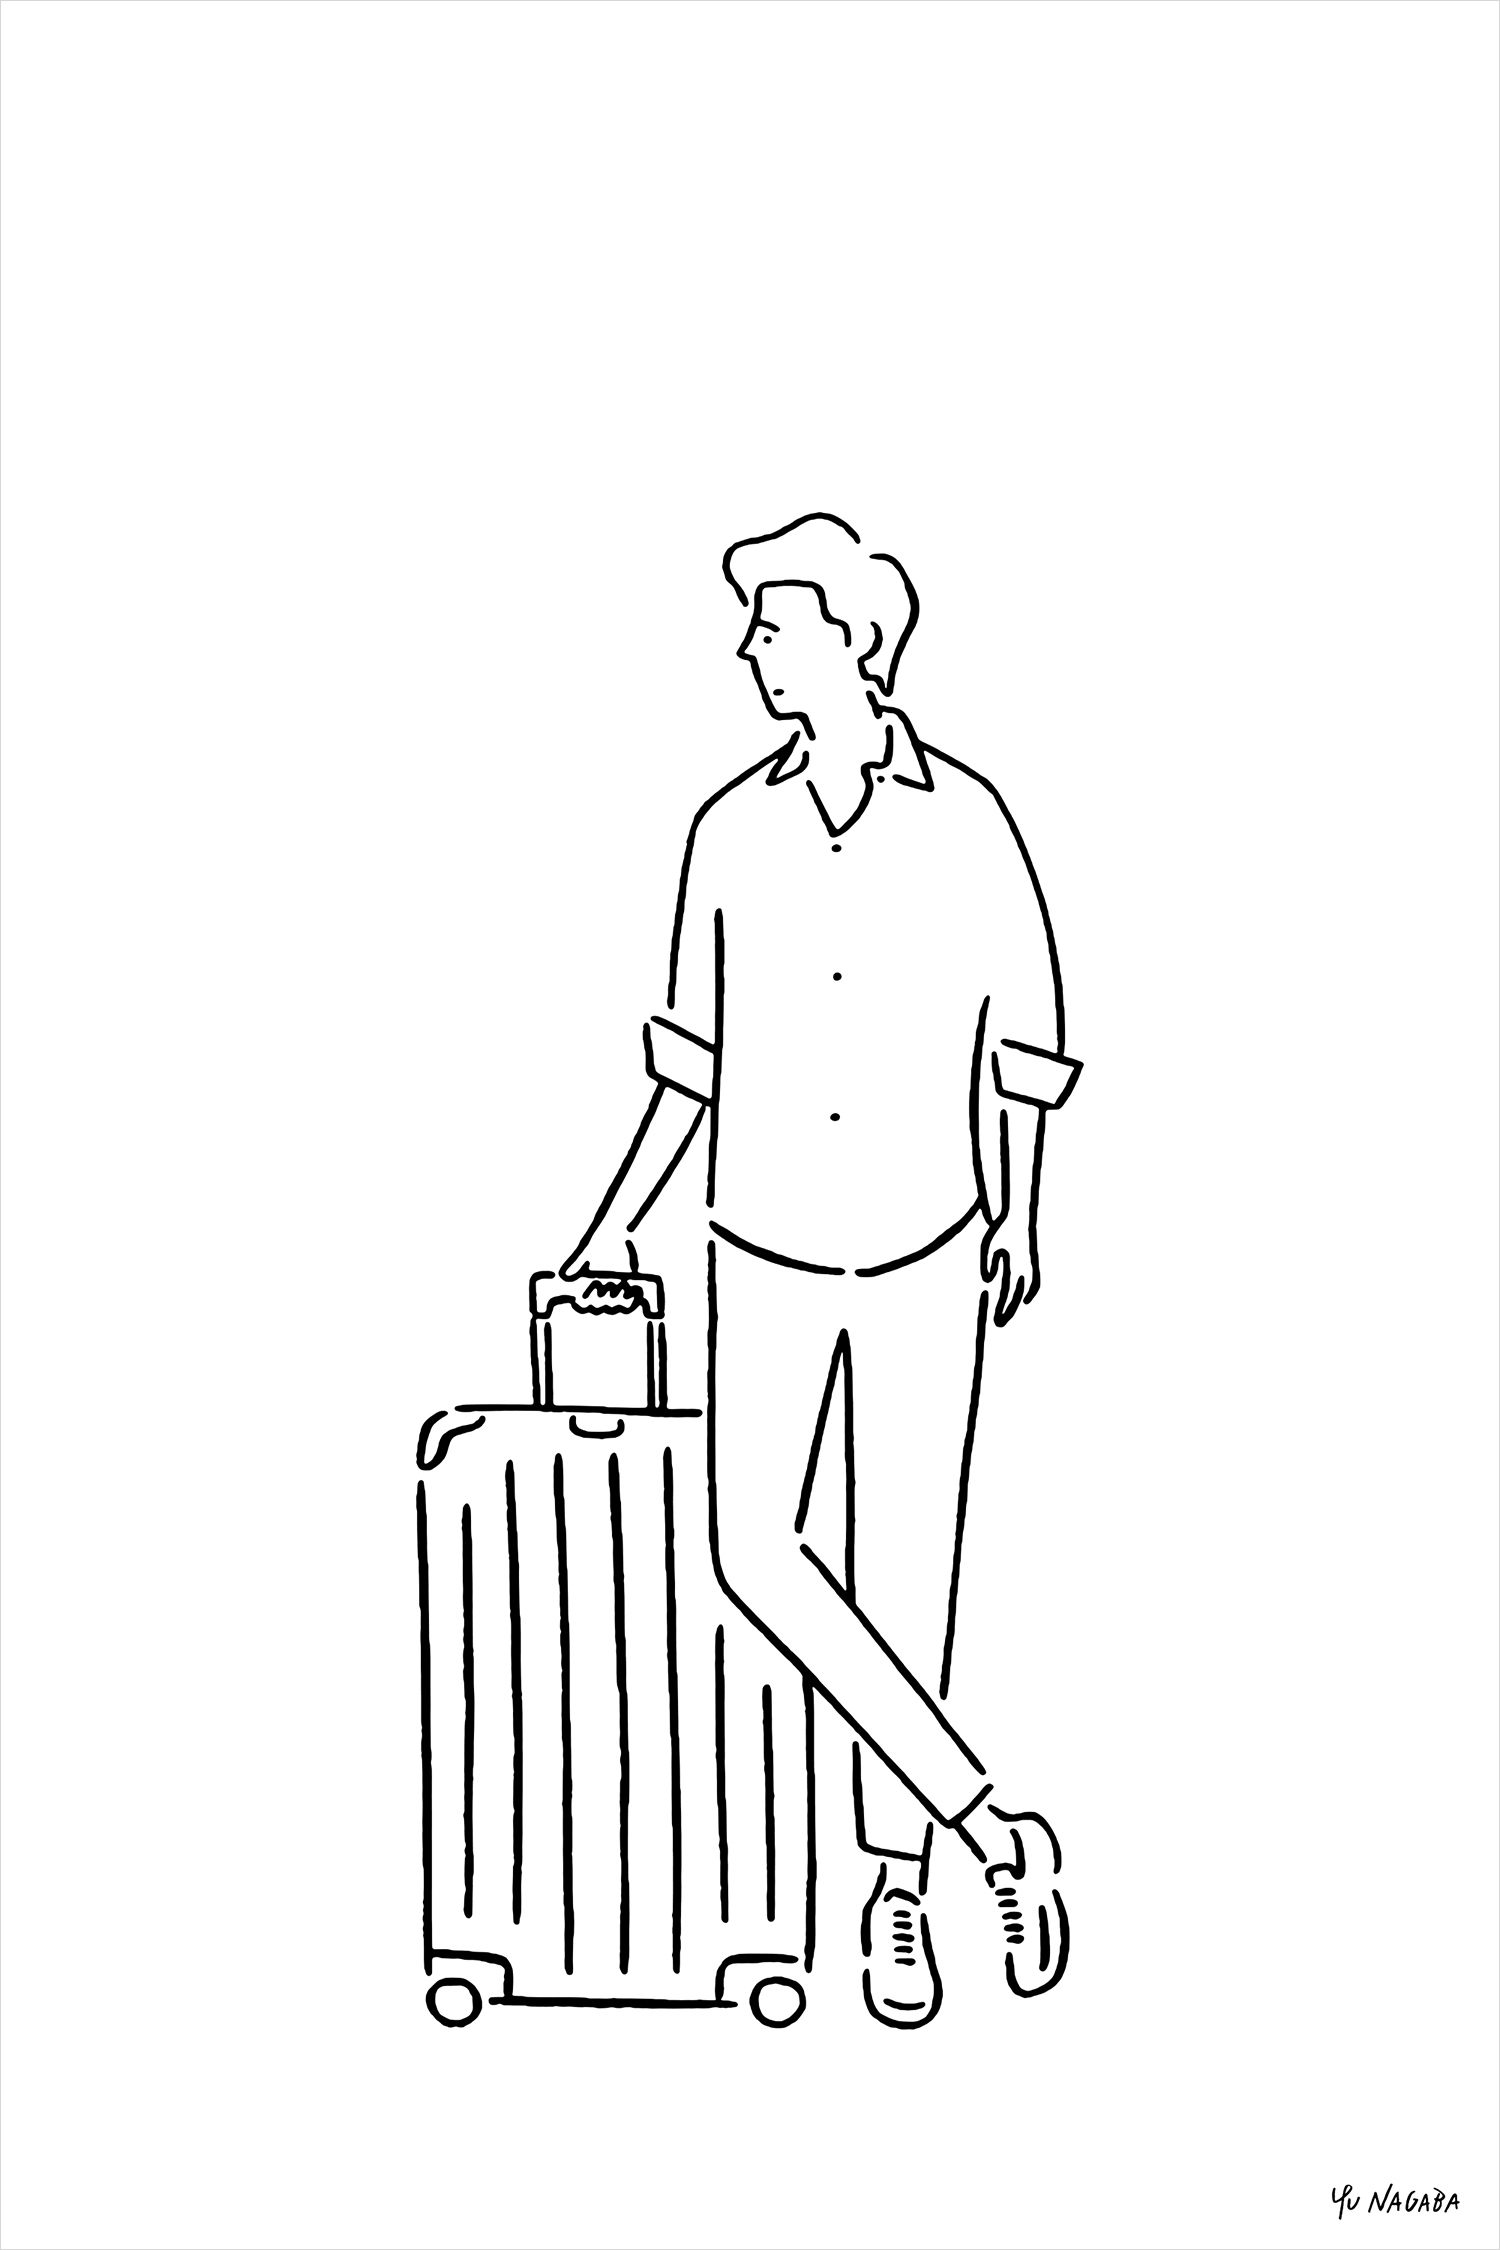 Illustration by Yu Nagaba for functional luxury luggage manufacturer Rimowa